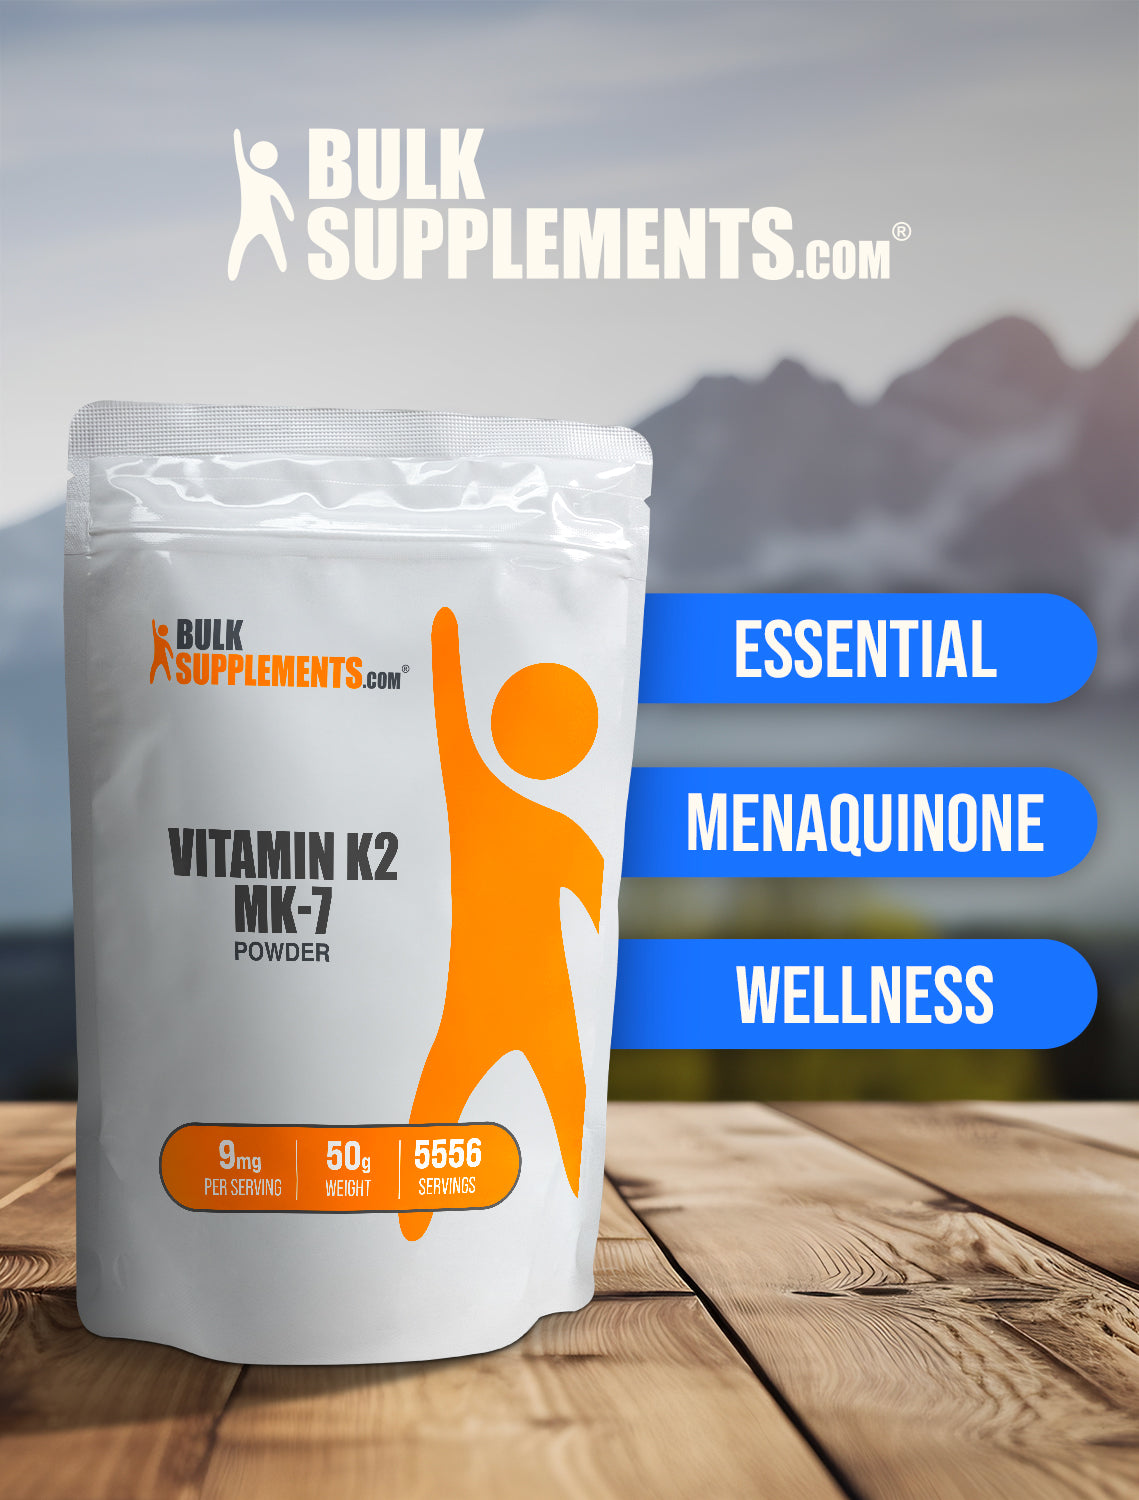 Vitamin K2 MK-7 powder keyword image 50g